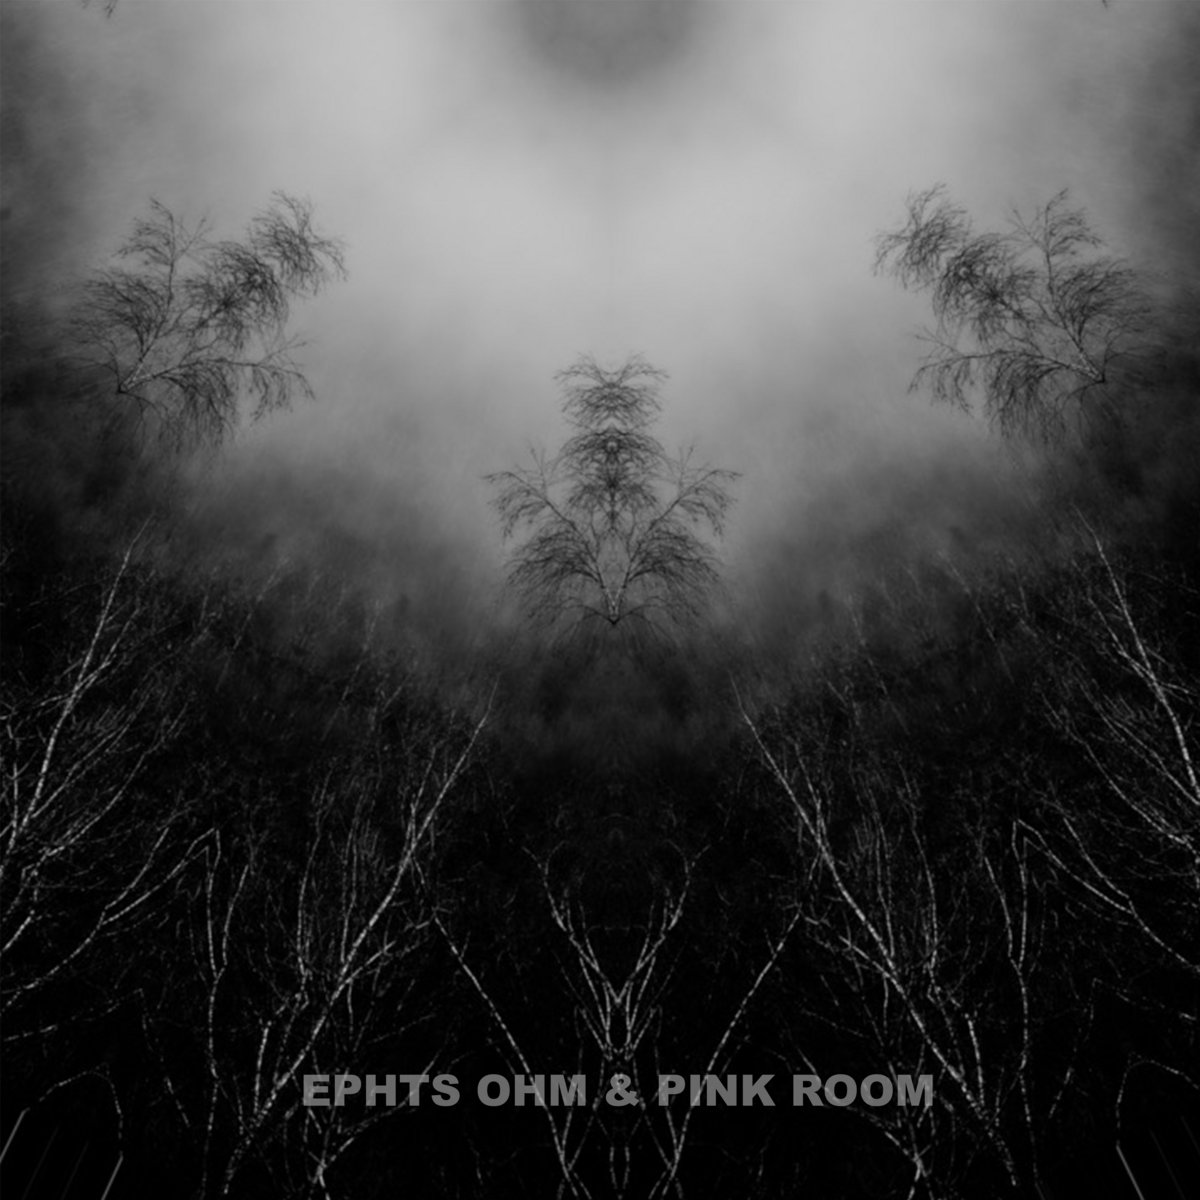 EPHTS OHM & PINK ROOM